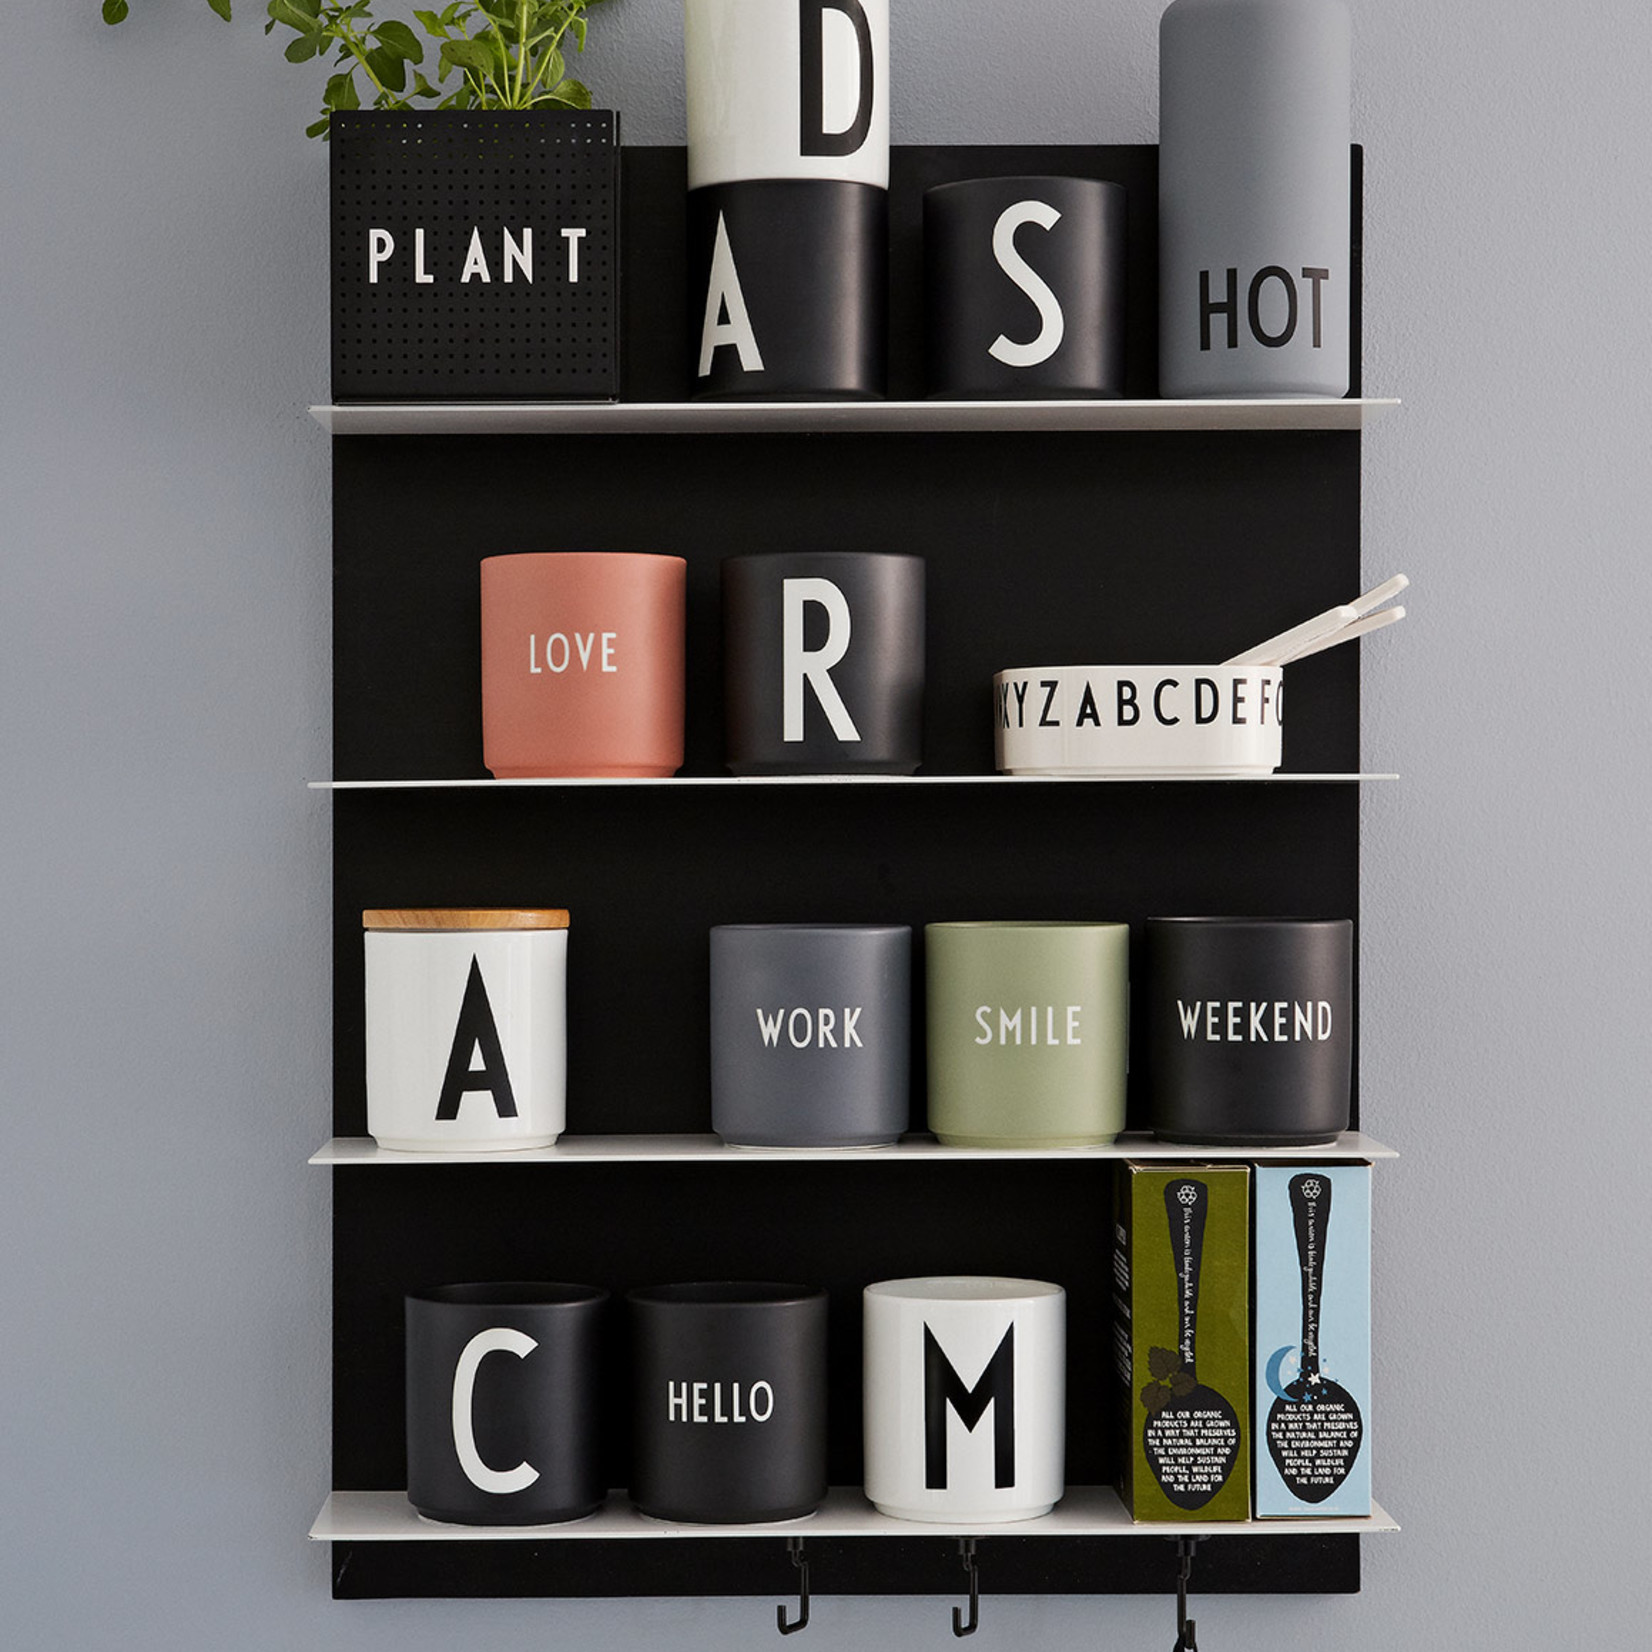 Design Letters Personal Porcelain cup S